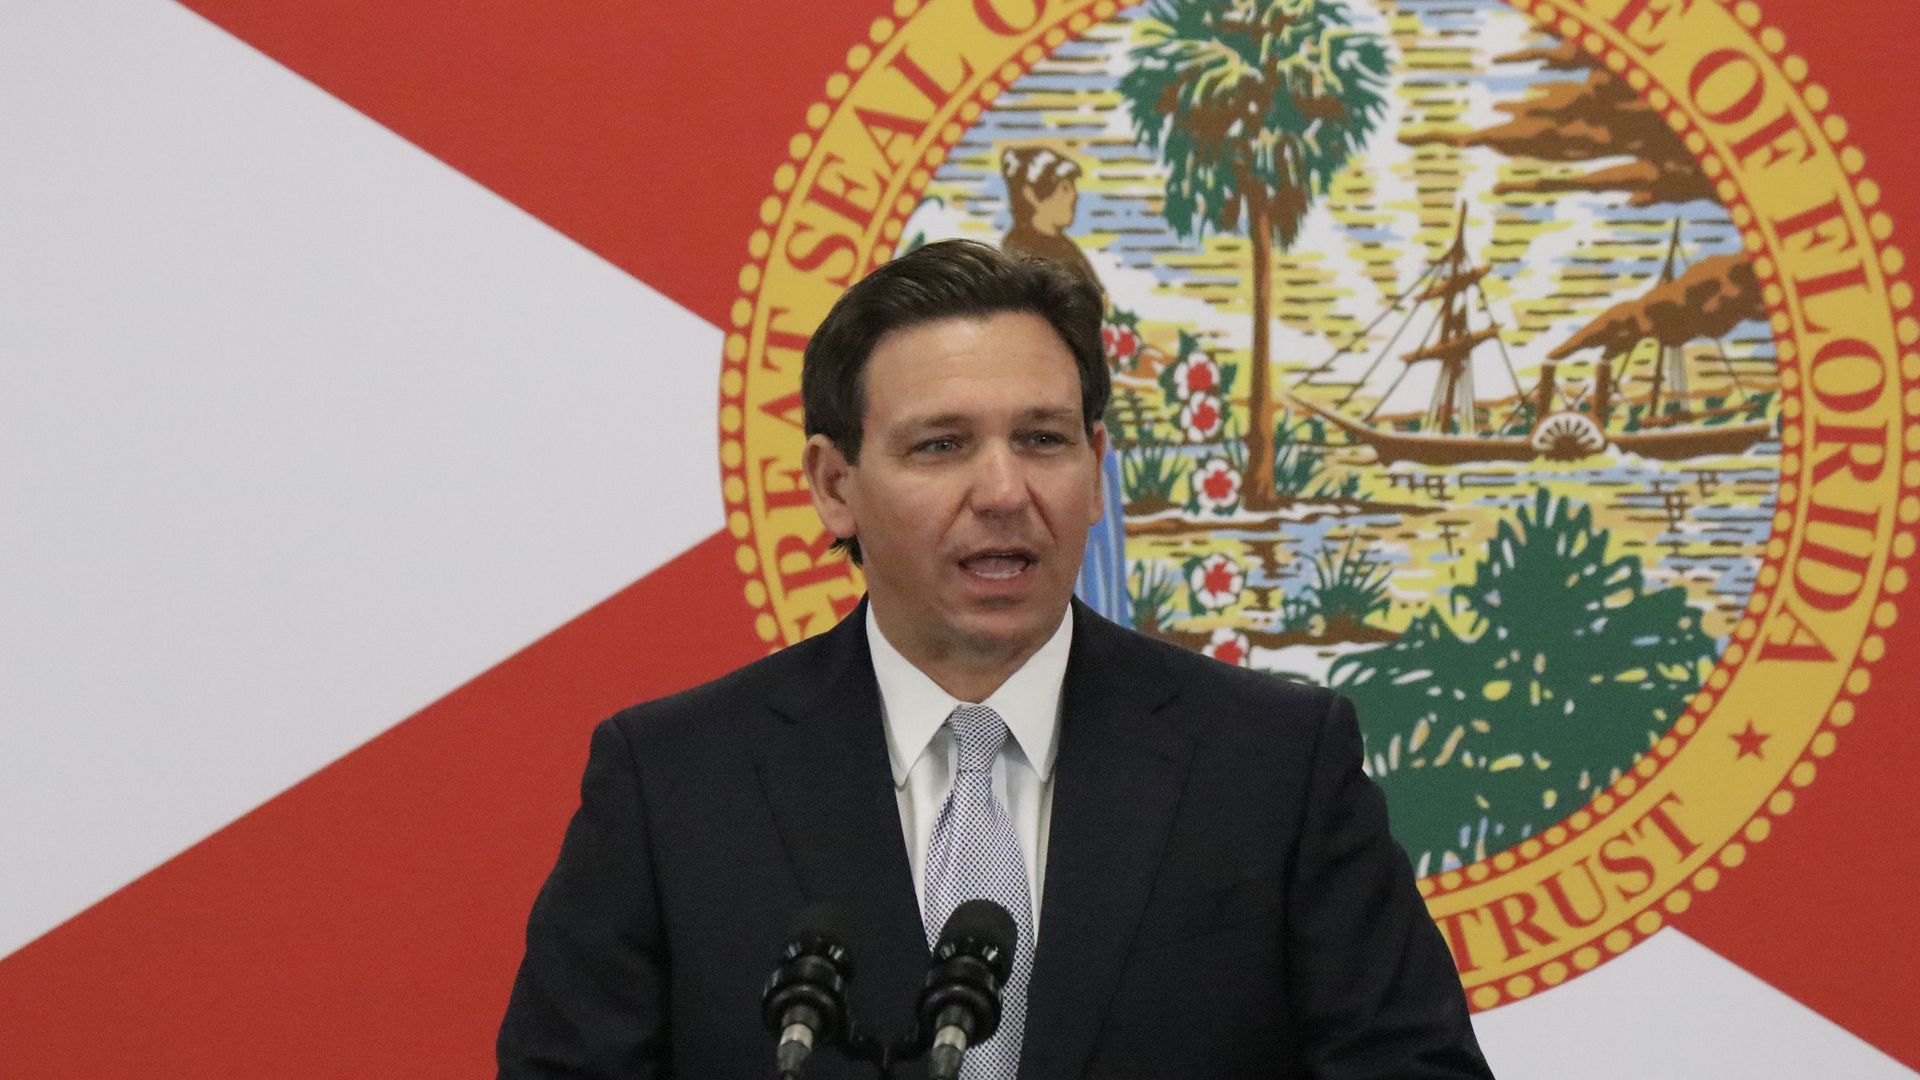 Florida Gov. Ron DeSantis speaking at a press conference.